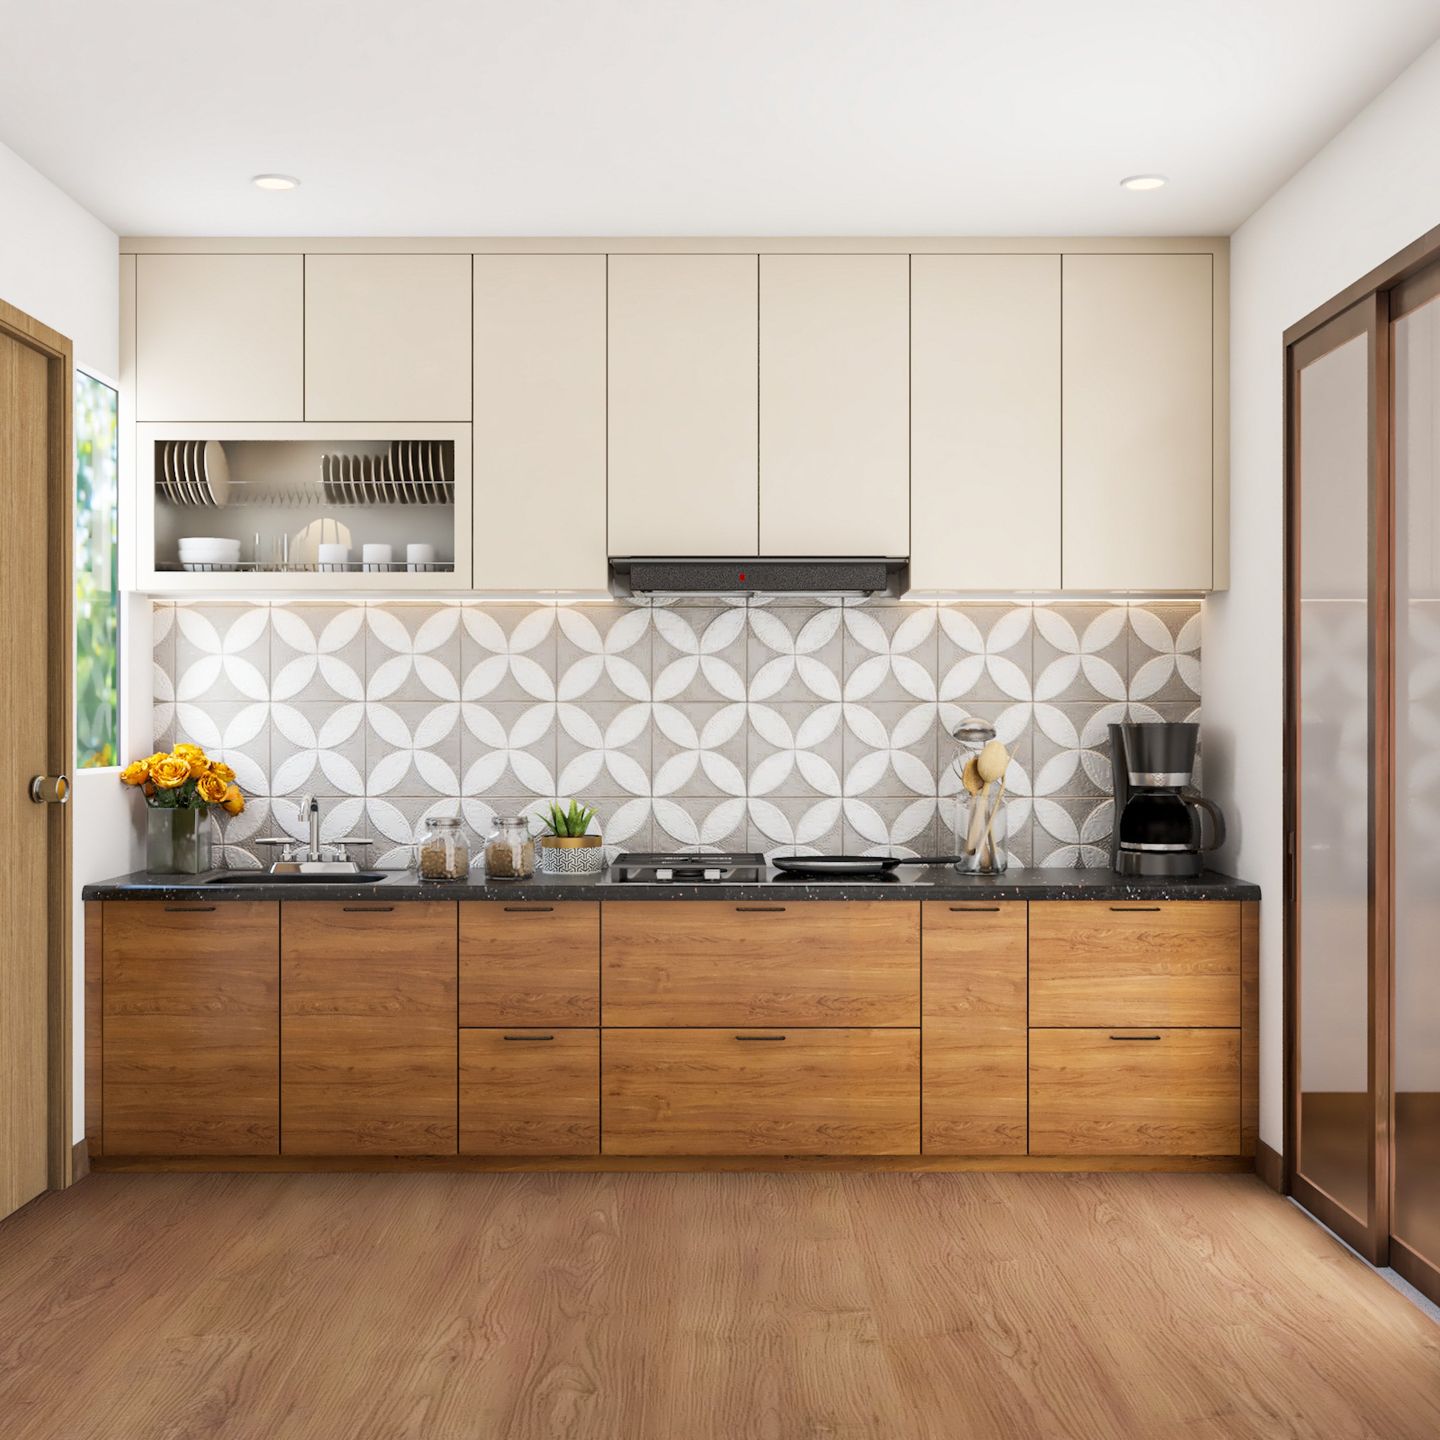 Scandinavian Kitchen Design With Wooden Flooring - Livspace